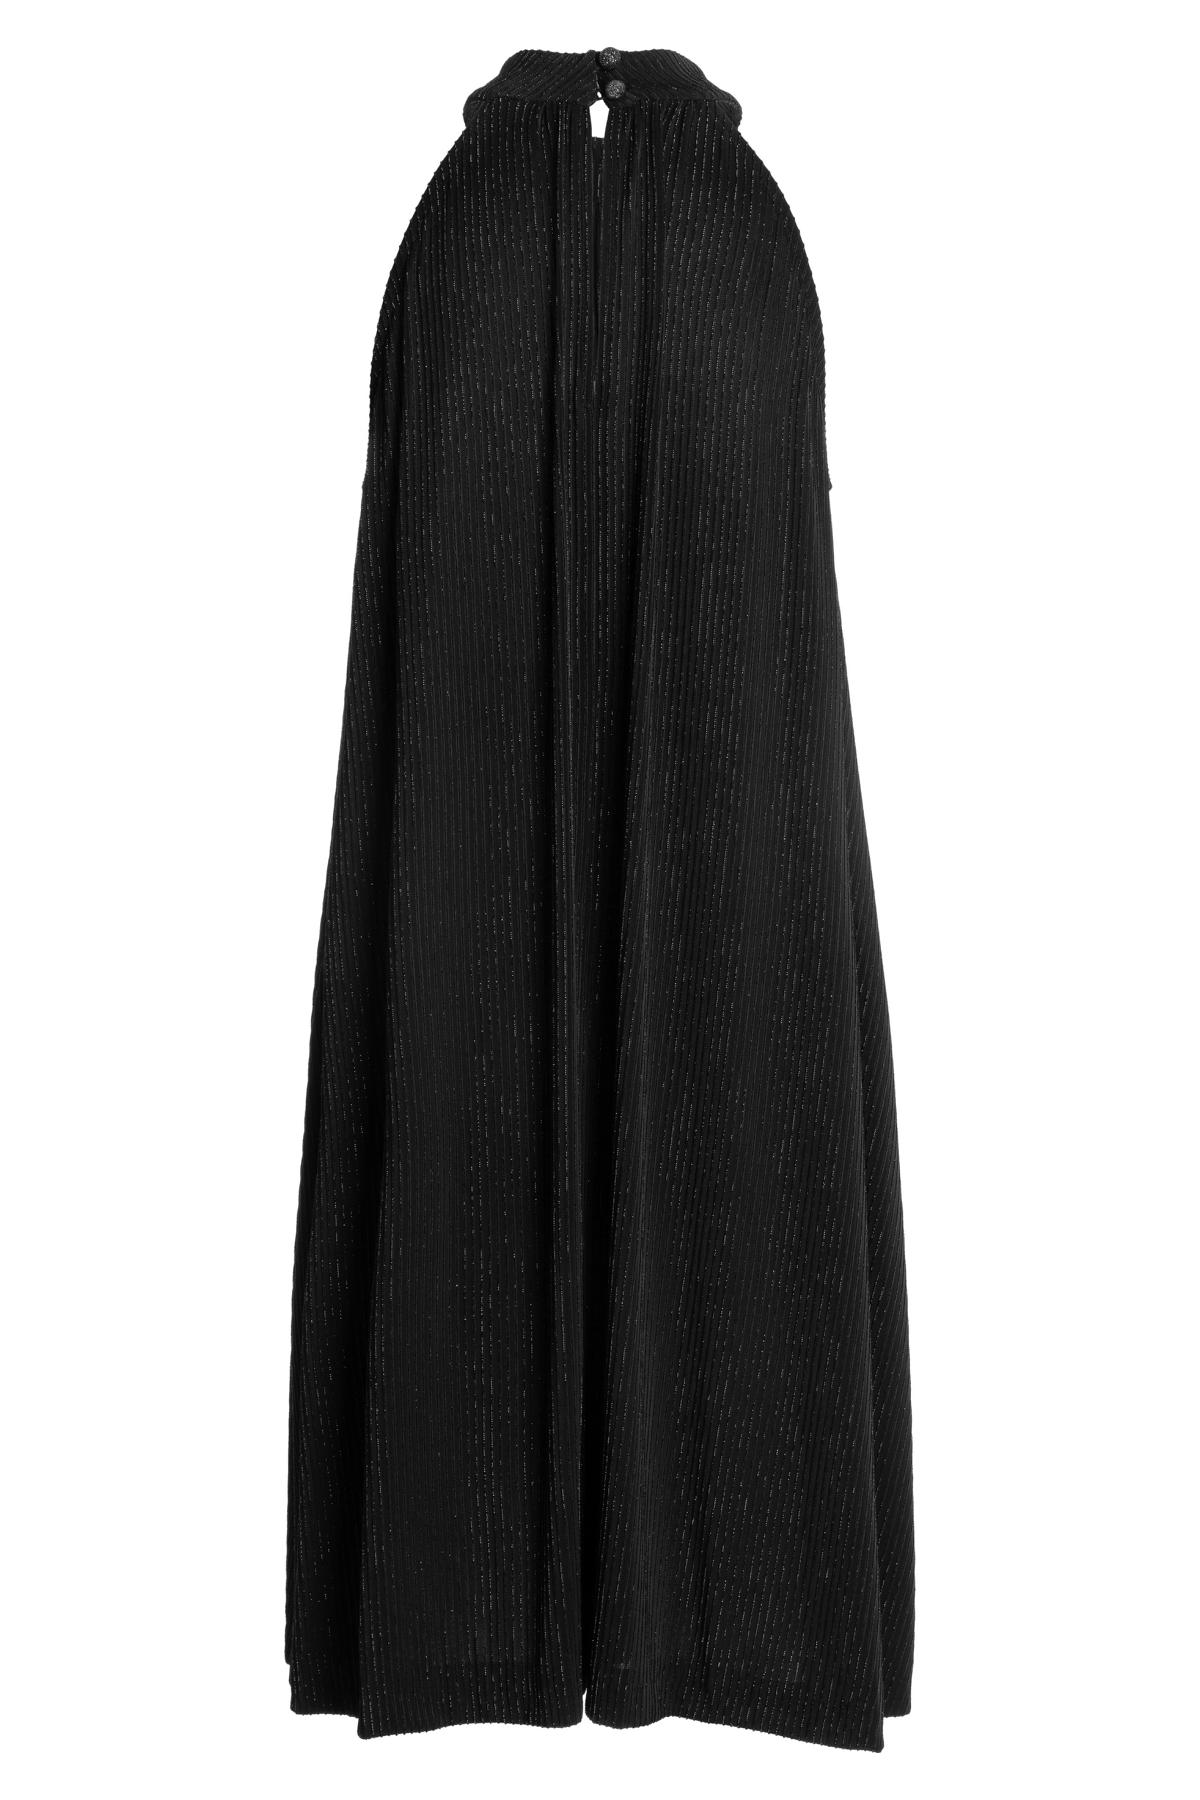 Shoulder-free dress Watryn from black lurex-plissee | Ana Alcazar